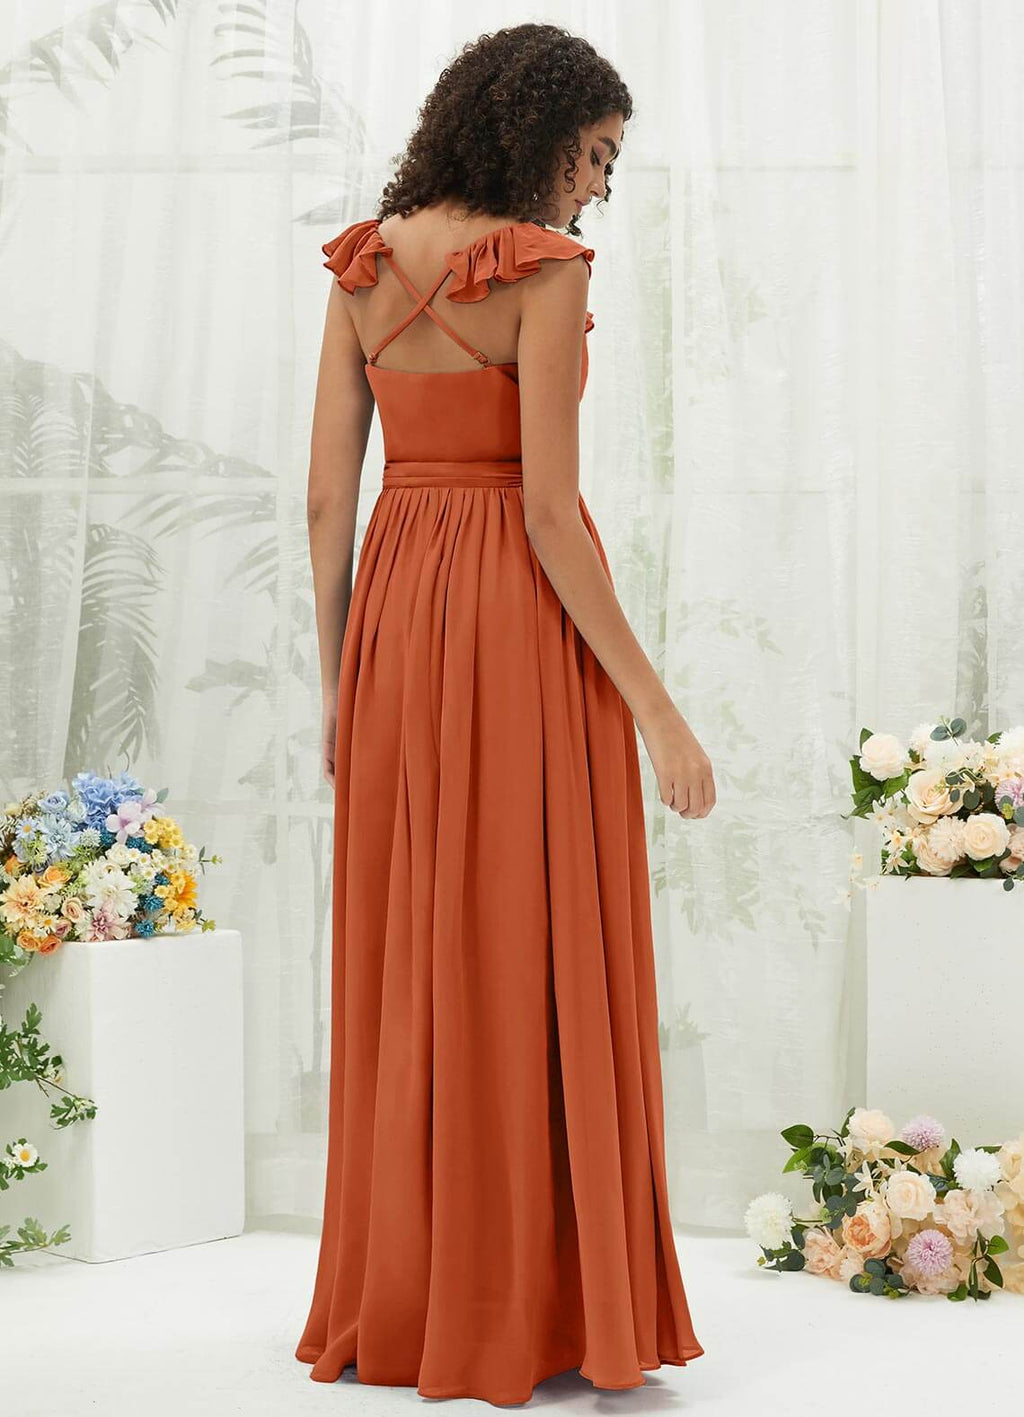 NZ Bridal Burnt Orange Ruffle Straps Chiffon bridesmaid dresses R3702 Valerie a